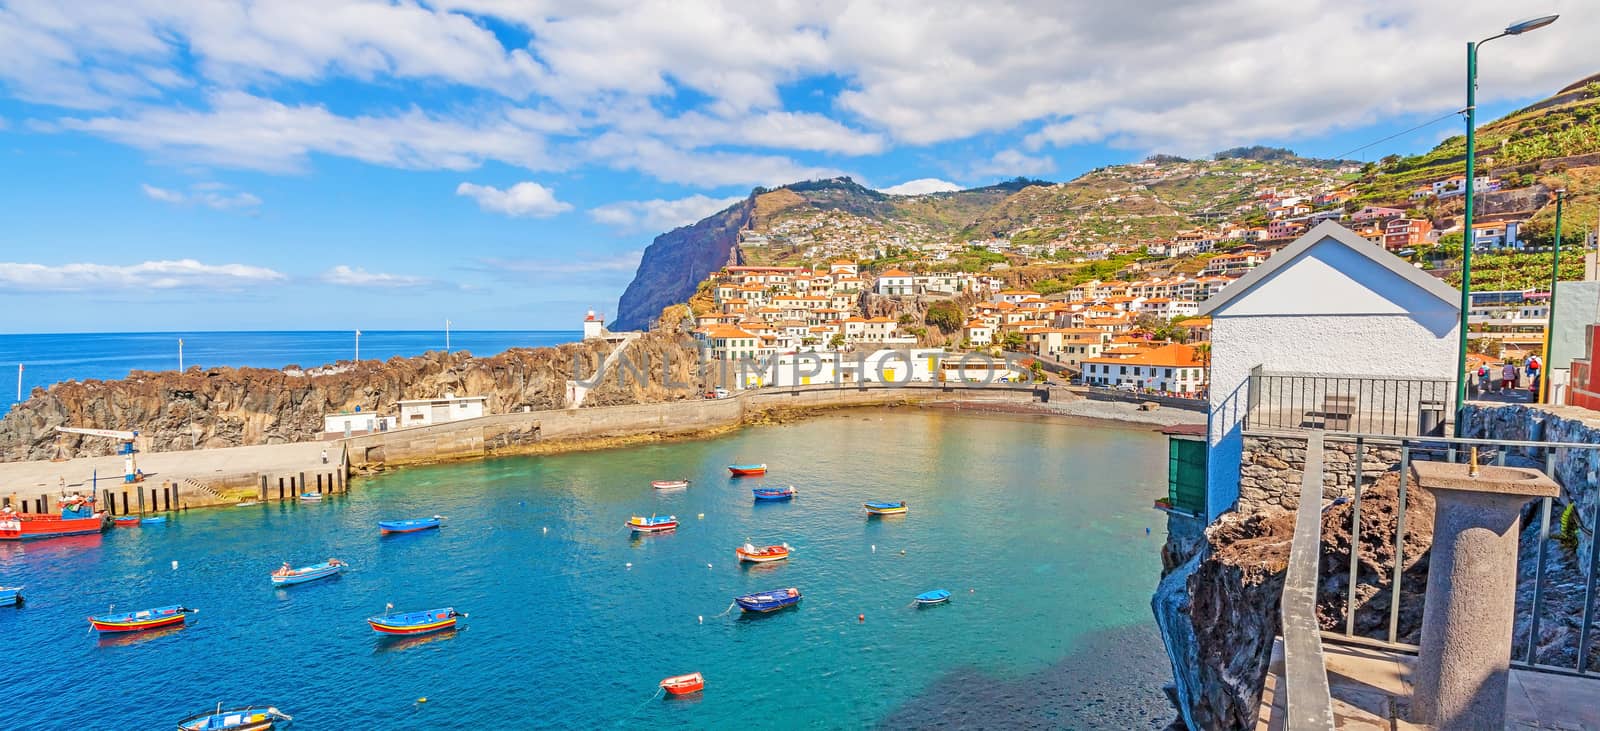 Panorama harbor of Camara de Lobos, Madeira with fishing boats by aldorado